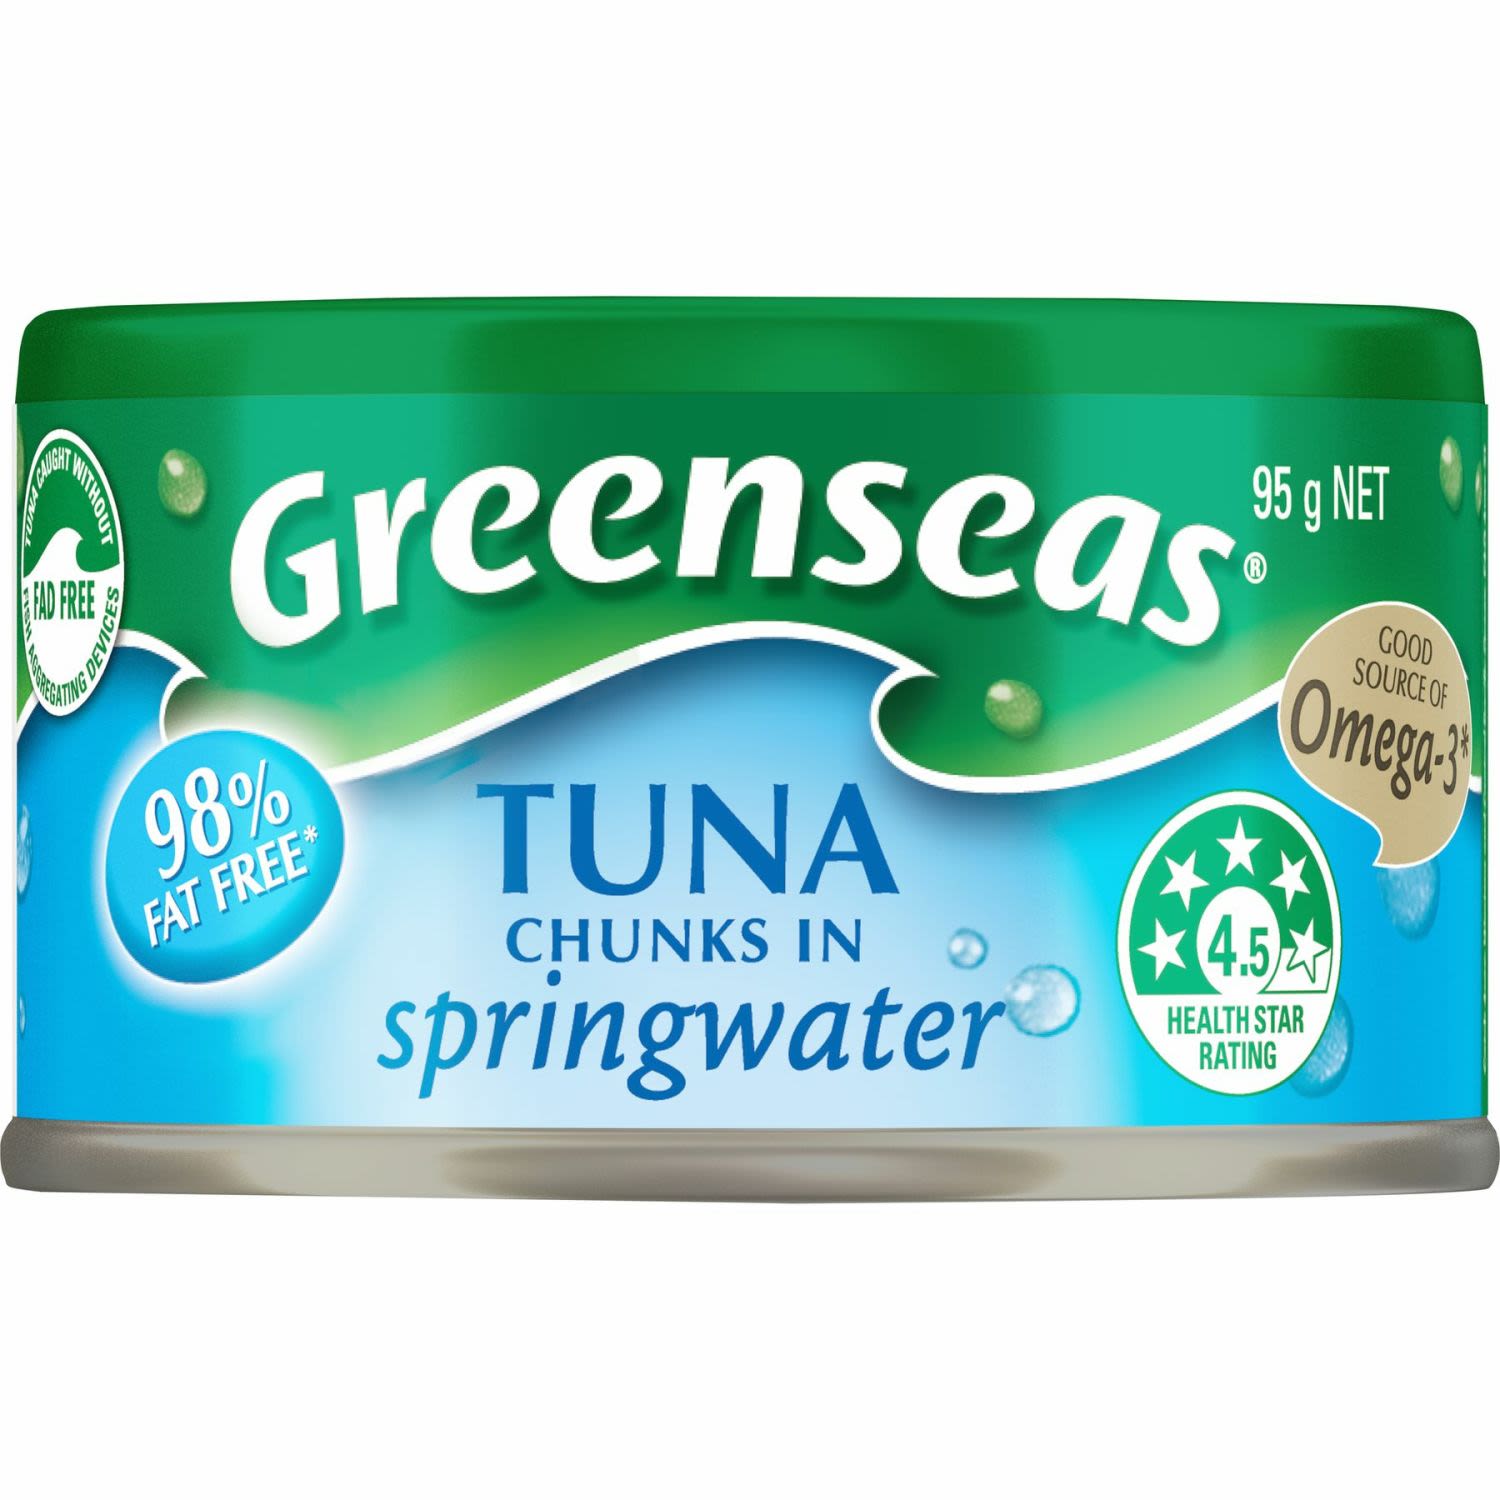 Greenseas Tuna Chunks in Springwater, 95 Gram